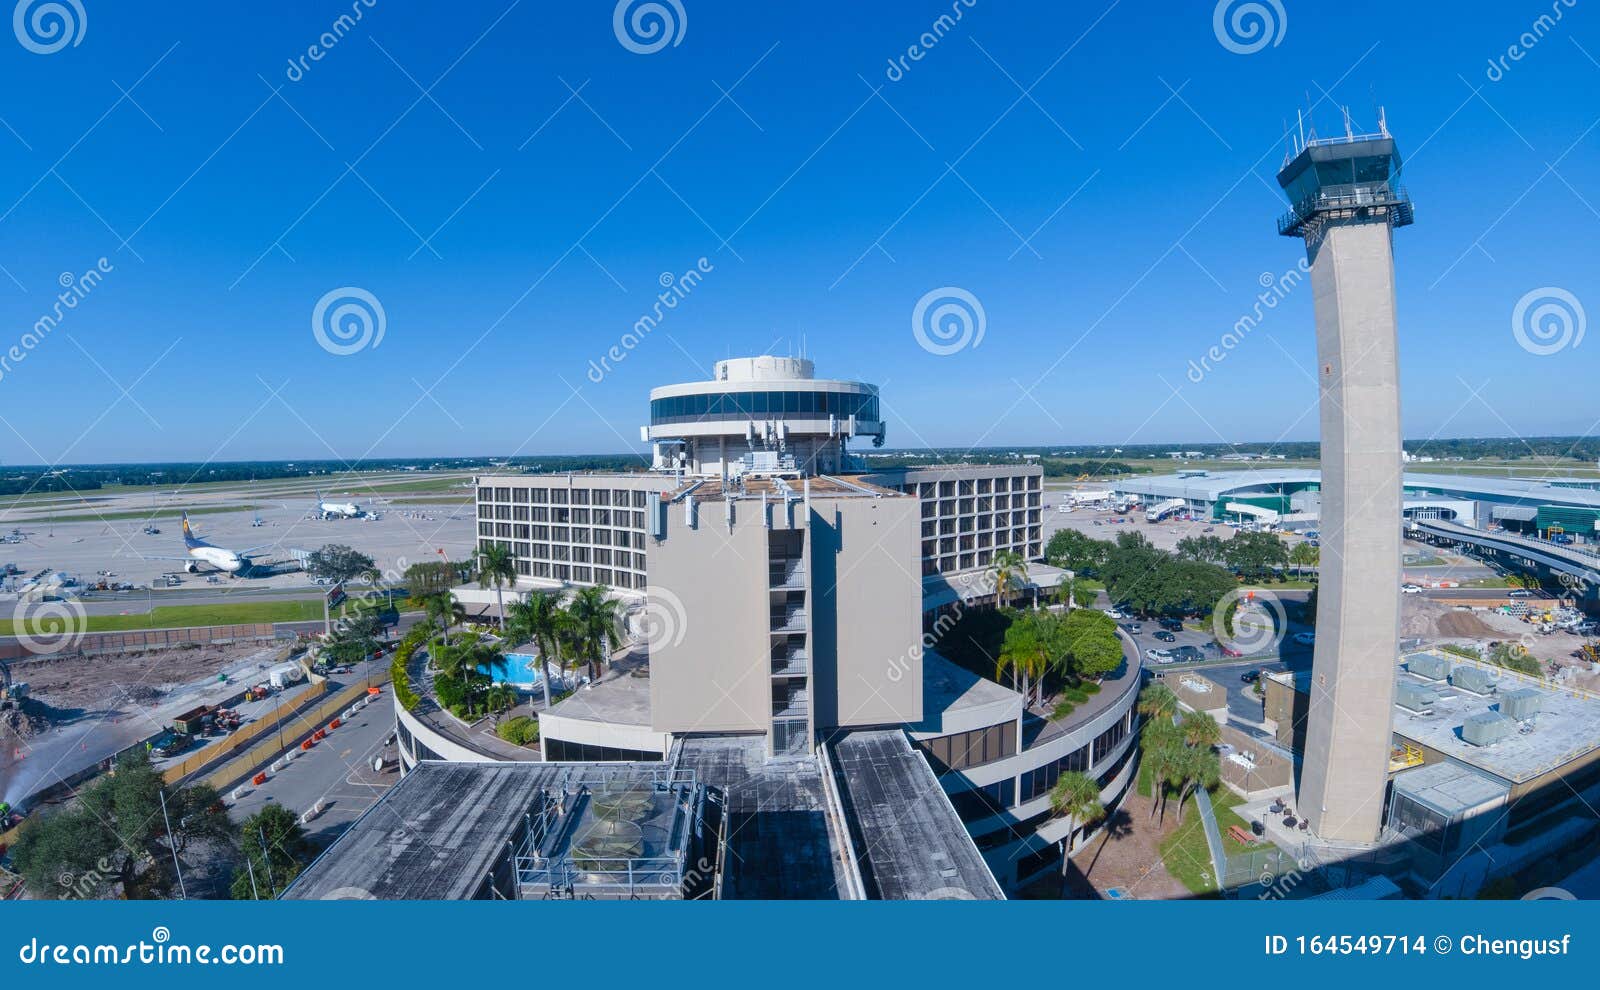 tpa airport hotels